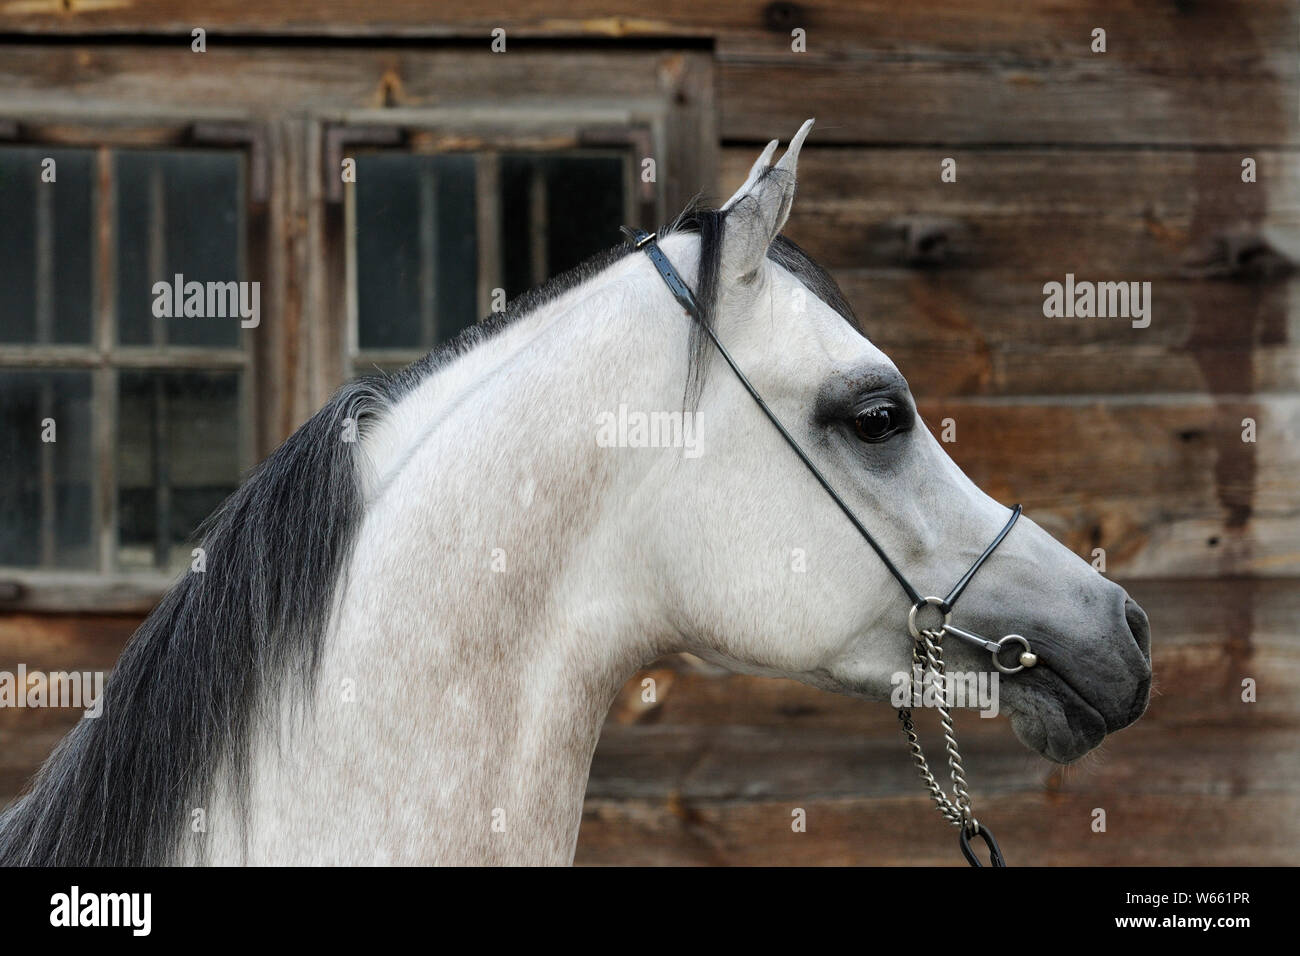 grey Arabian horse stallion with showholster Stock Photo